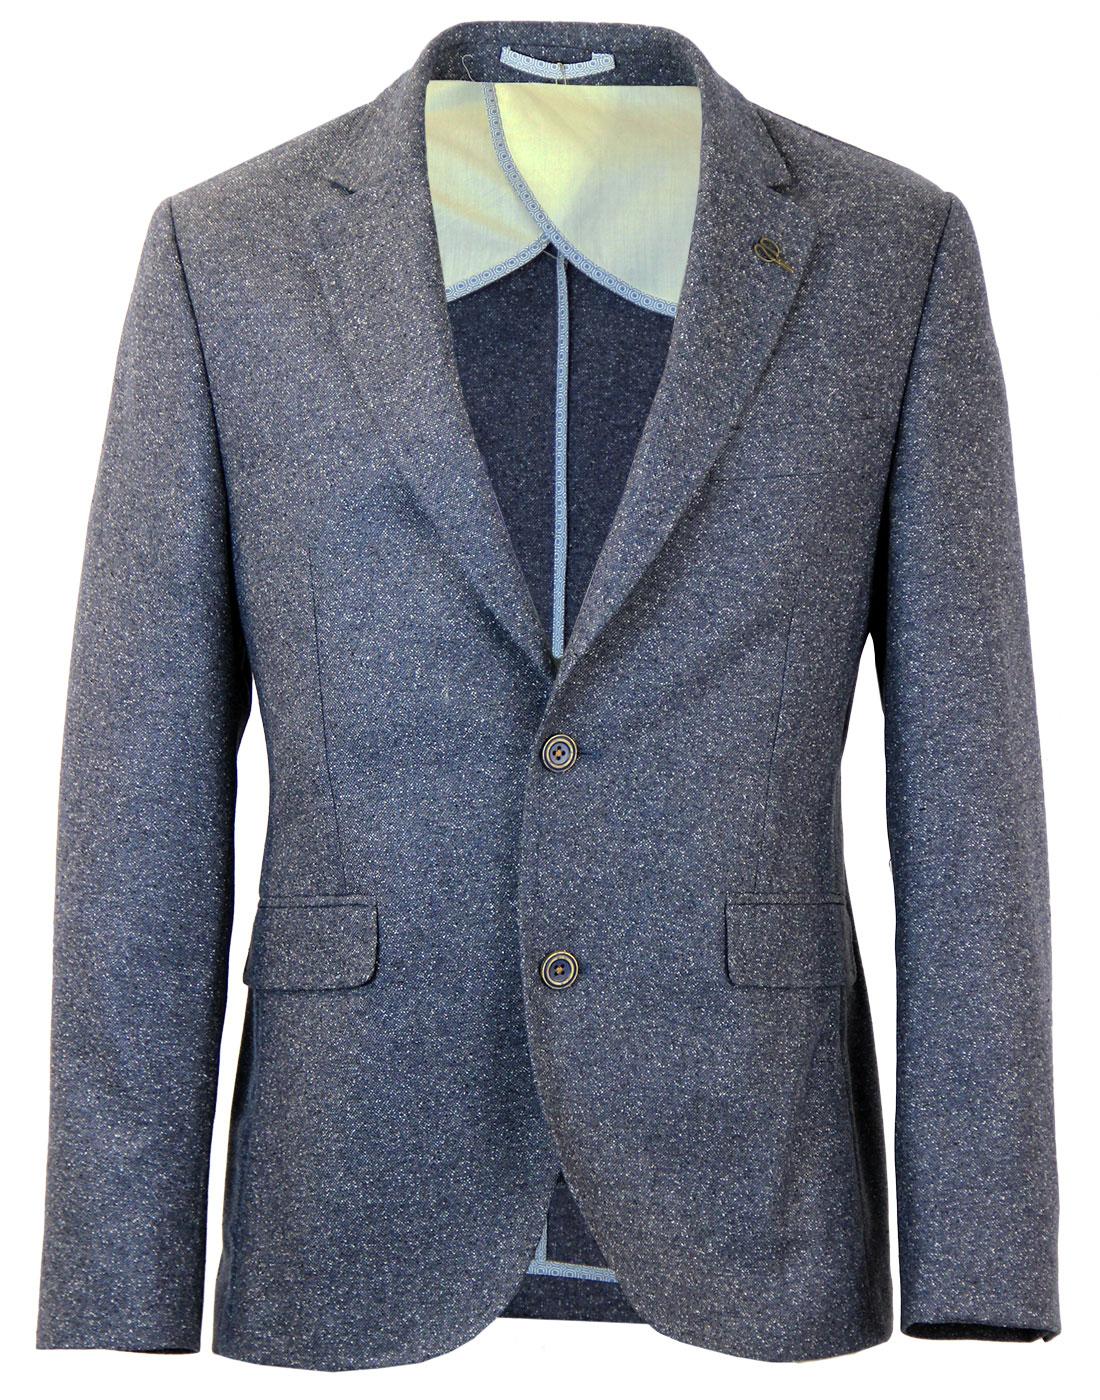 GIBSON LONDON Retro 60s Mod Blue Donegal Suit